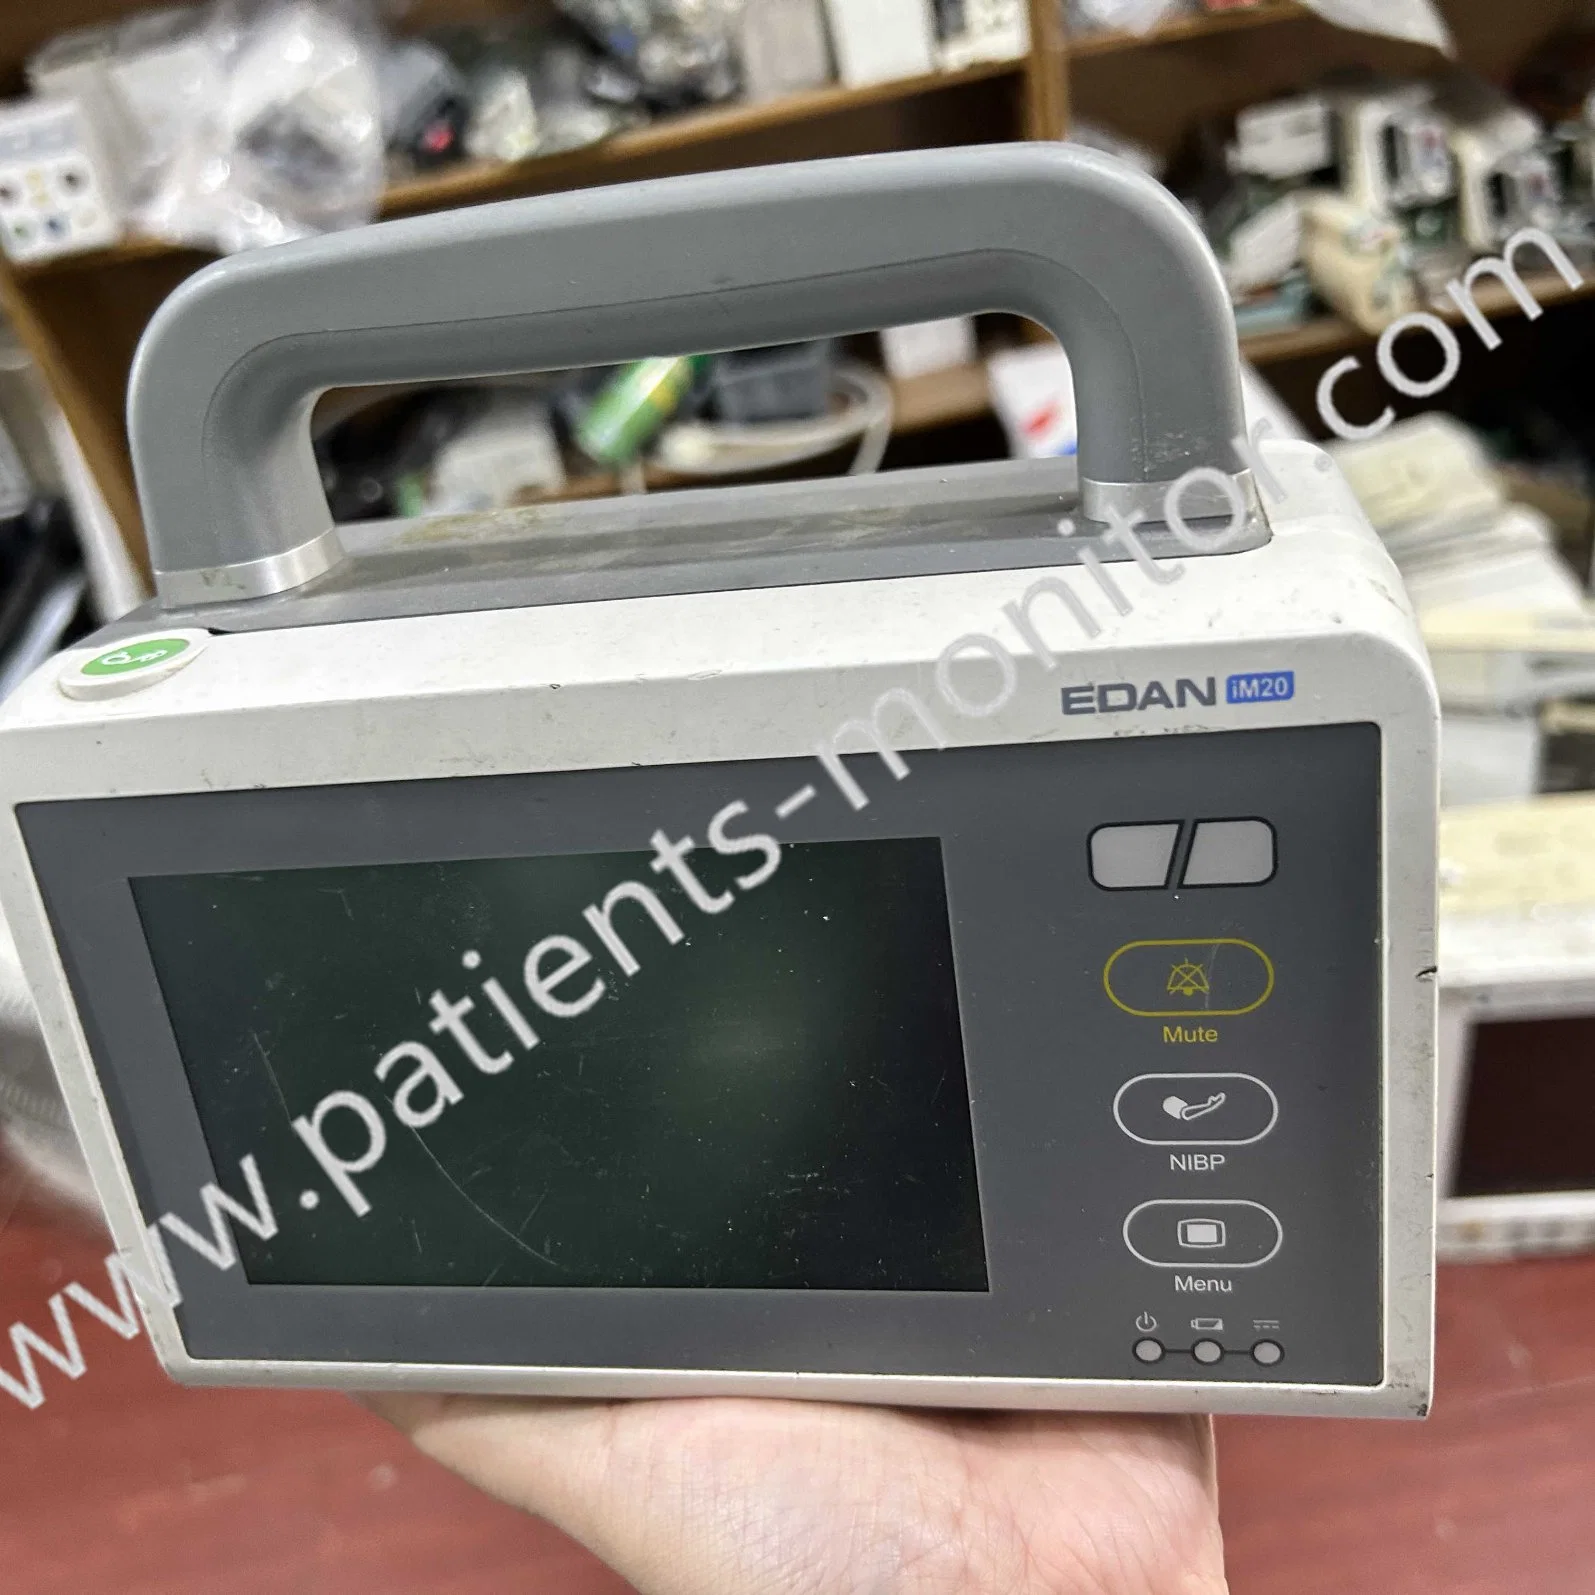 Edan Im20 Modular Patient Monitor Used Repair Medical Equipment for Hospital, Clinic